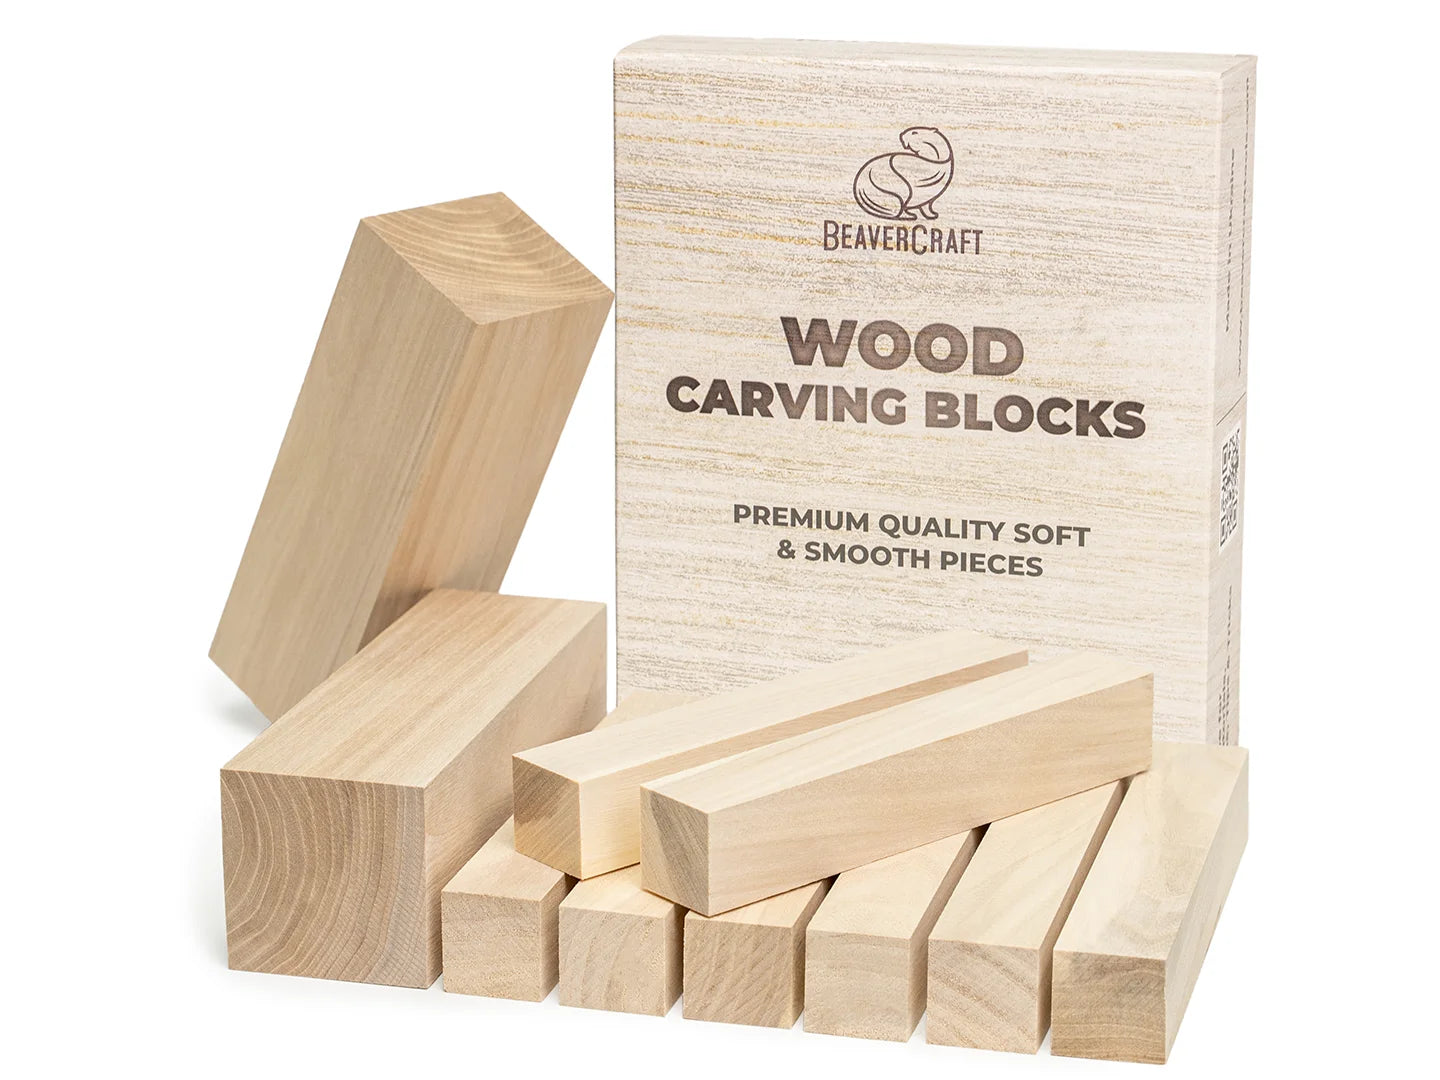 BeaverCraft BW10 Alder Wood Carving Blocks Wood for Whittling Carving Wood  Blocks Whittling Wood Wooden Blocks for Crafts Wood Carving Wood Blank